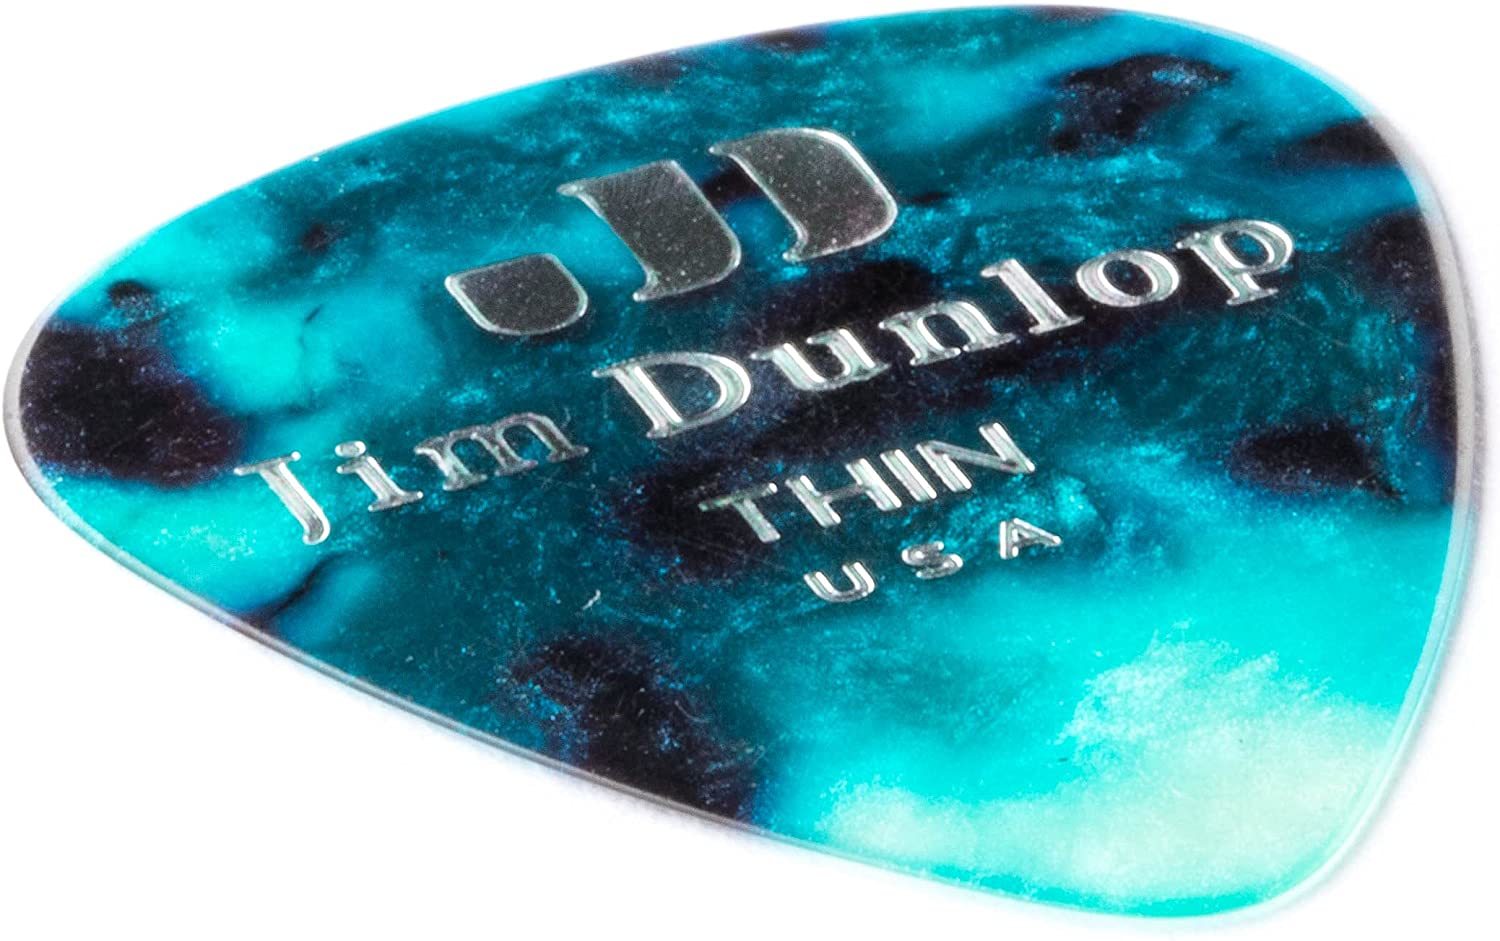 Dunlop Celluloid Turquoise Pearloid Thin 483P11TH 12Pack  медиаторы, тонкие, 12 шт.